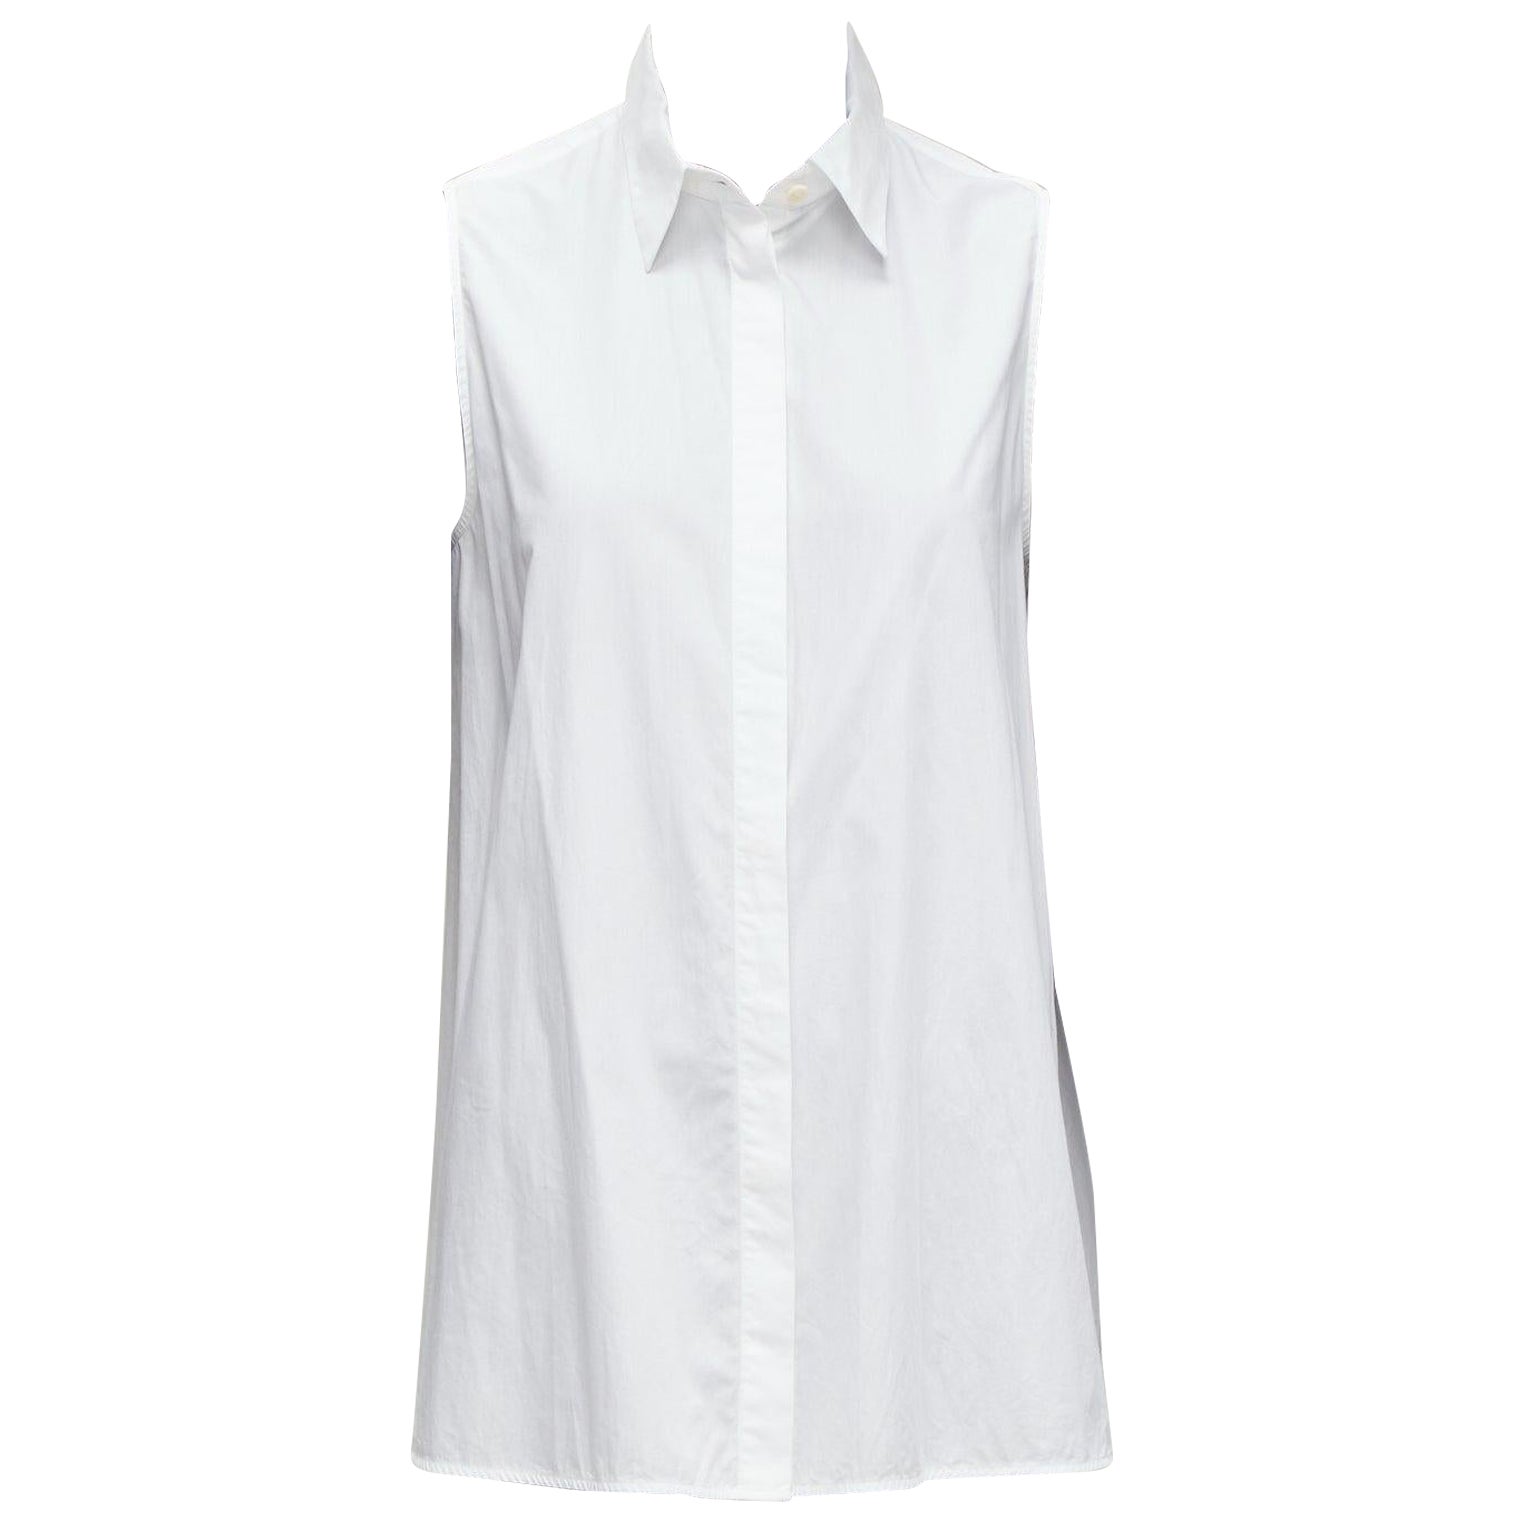 ACNE STUDIOS white cotton minimal sleeveless side slits tunic top FR36 S For Sale